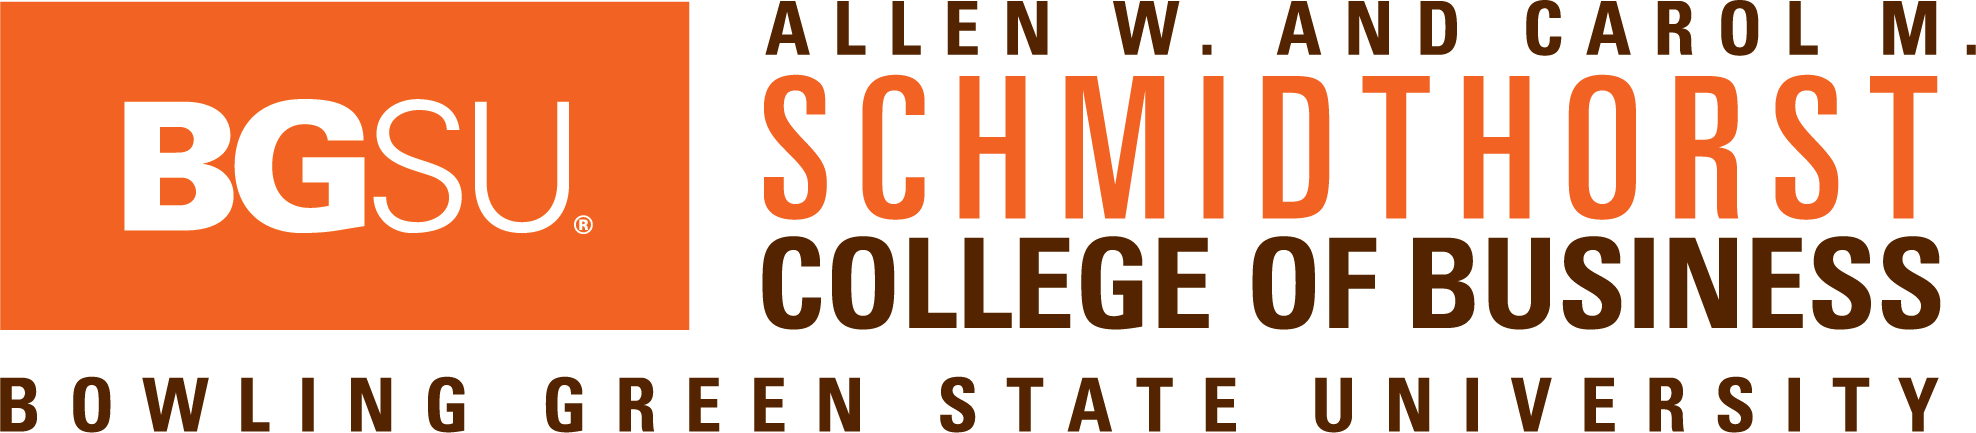 Schmidthorst College of Business Logo